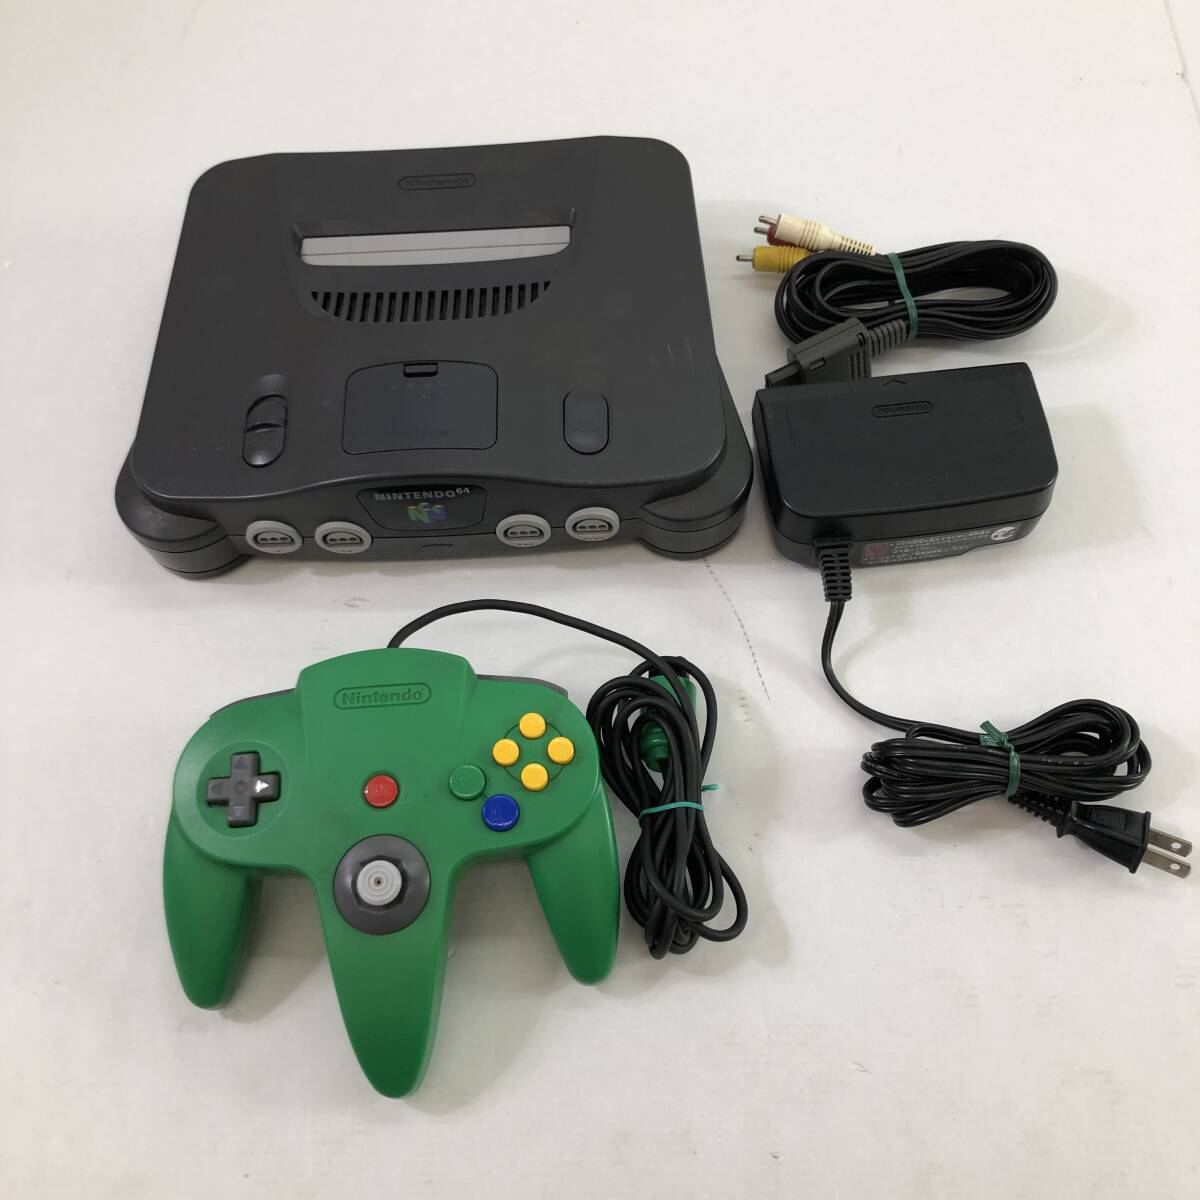 (26493) ■ Nintendo 64 コントローラー[グリーン] ※箱無し 中古品の画像1